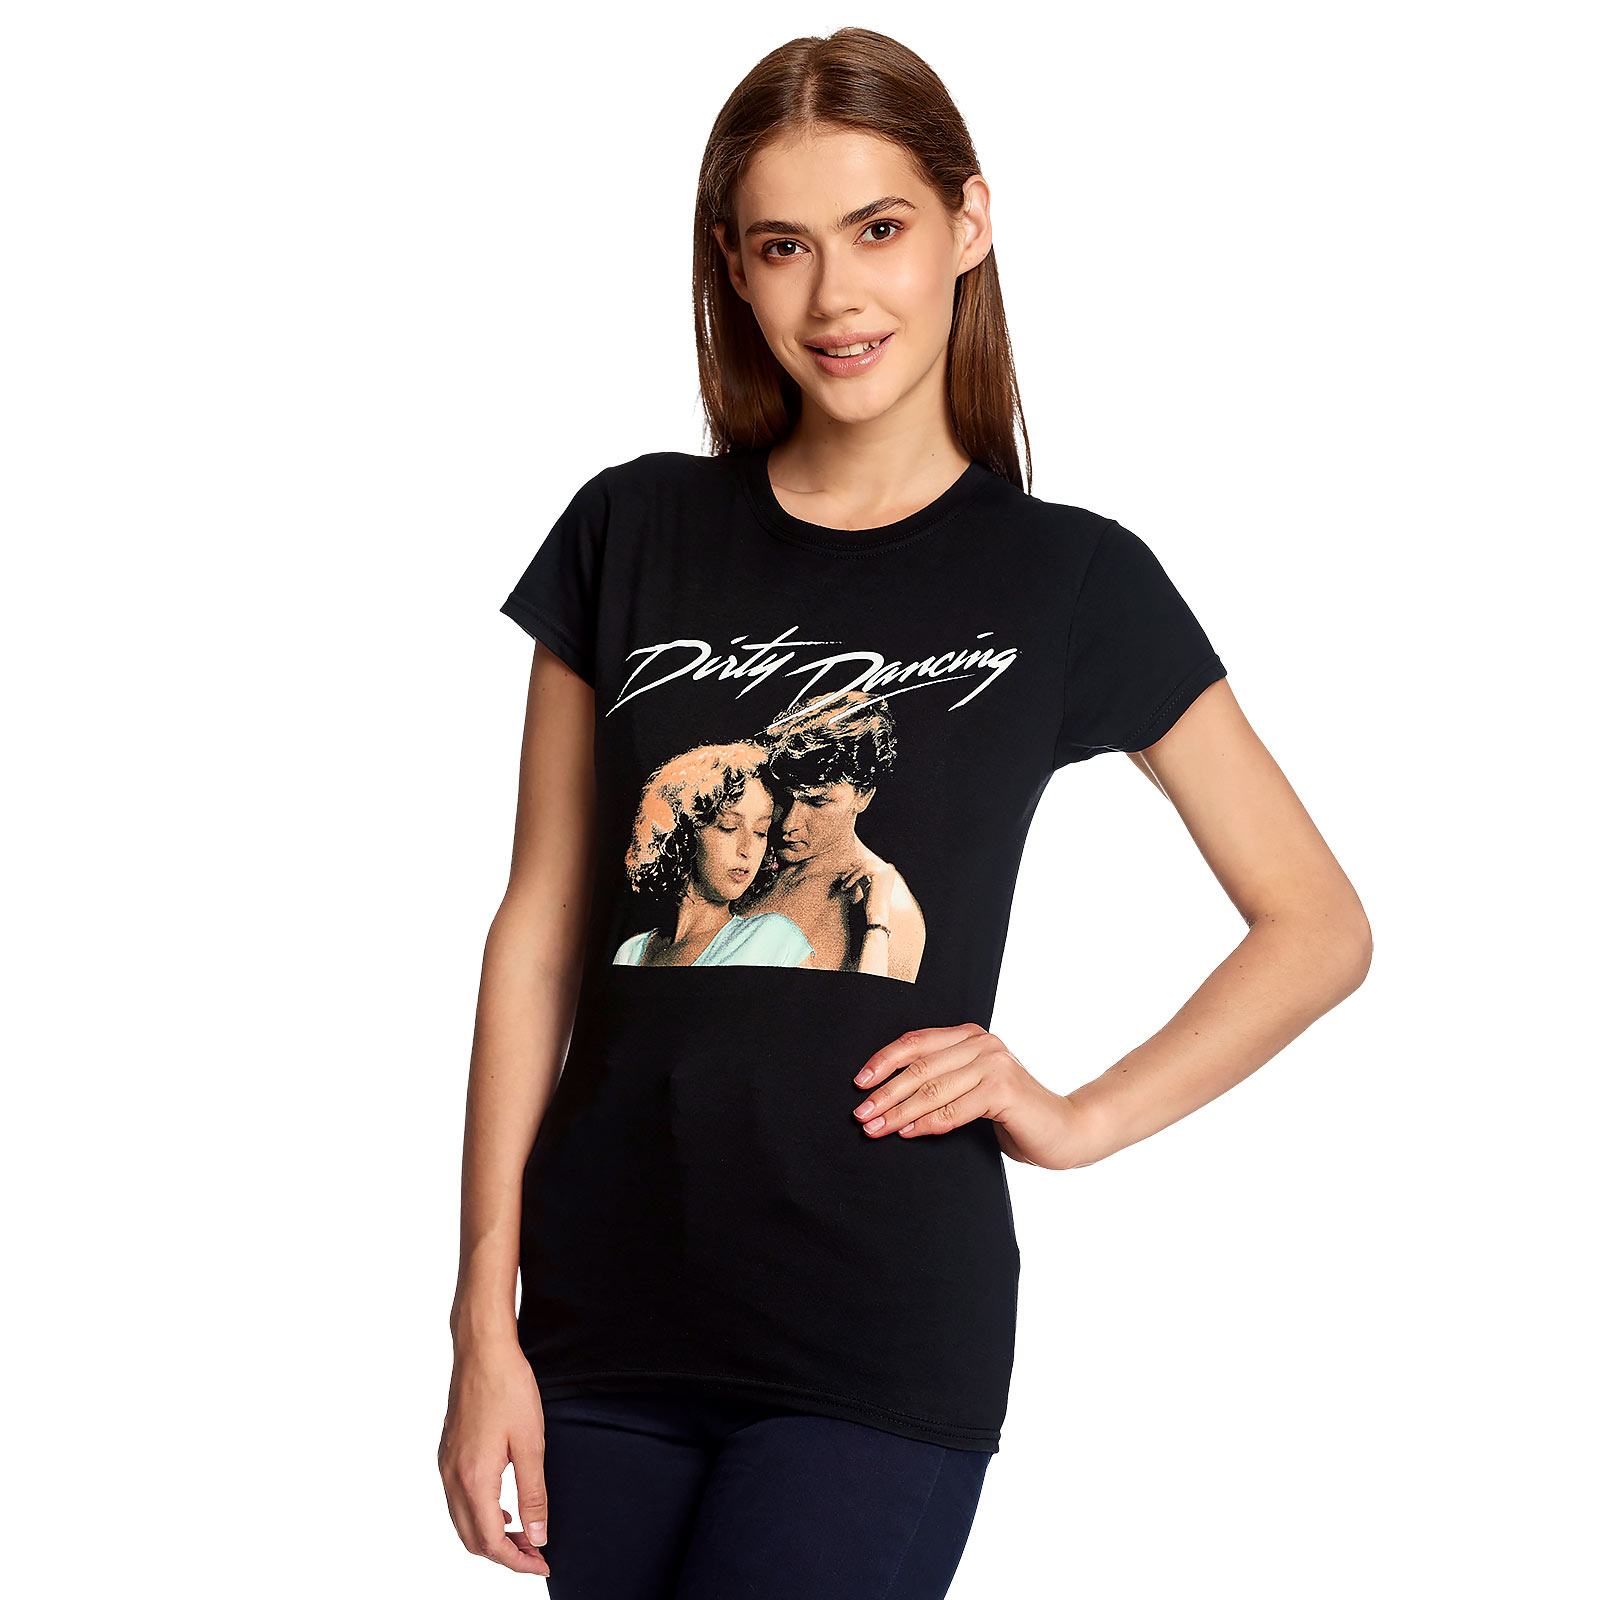 Dirty Dancing - Baby & Johnny T-Shirt Ladies black